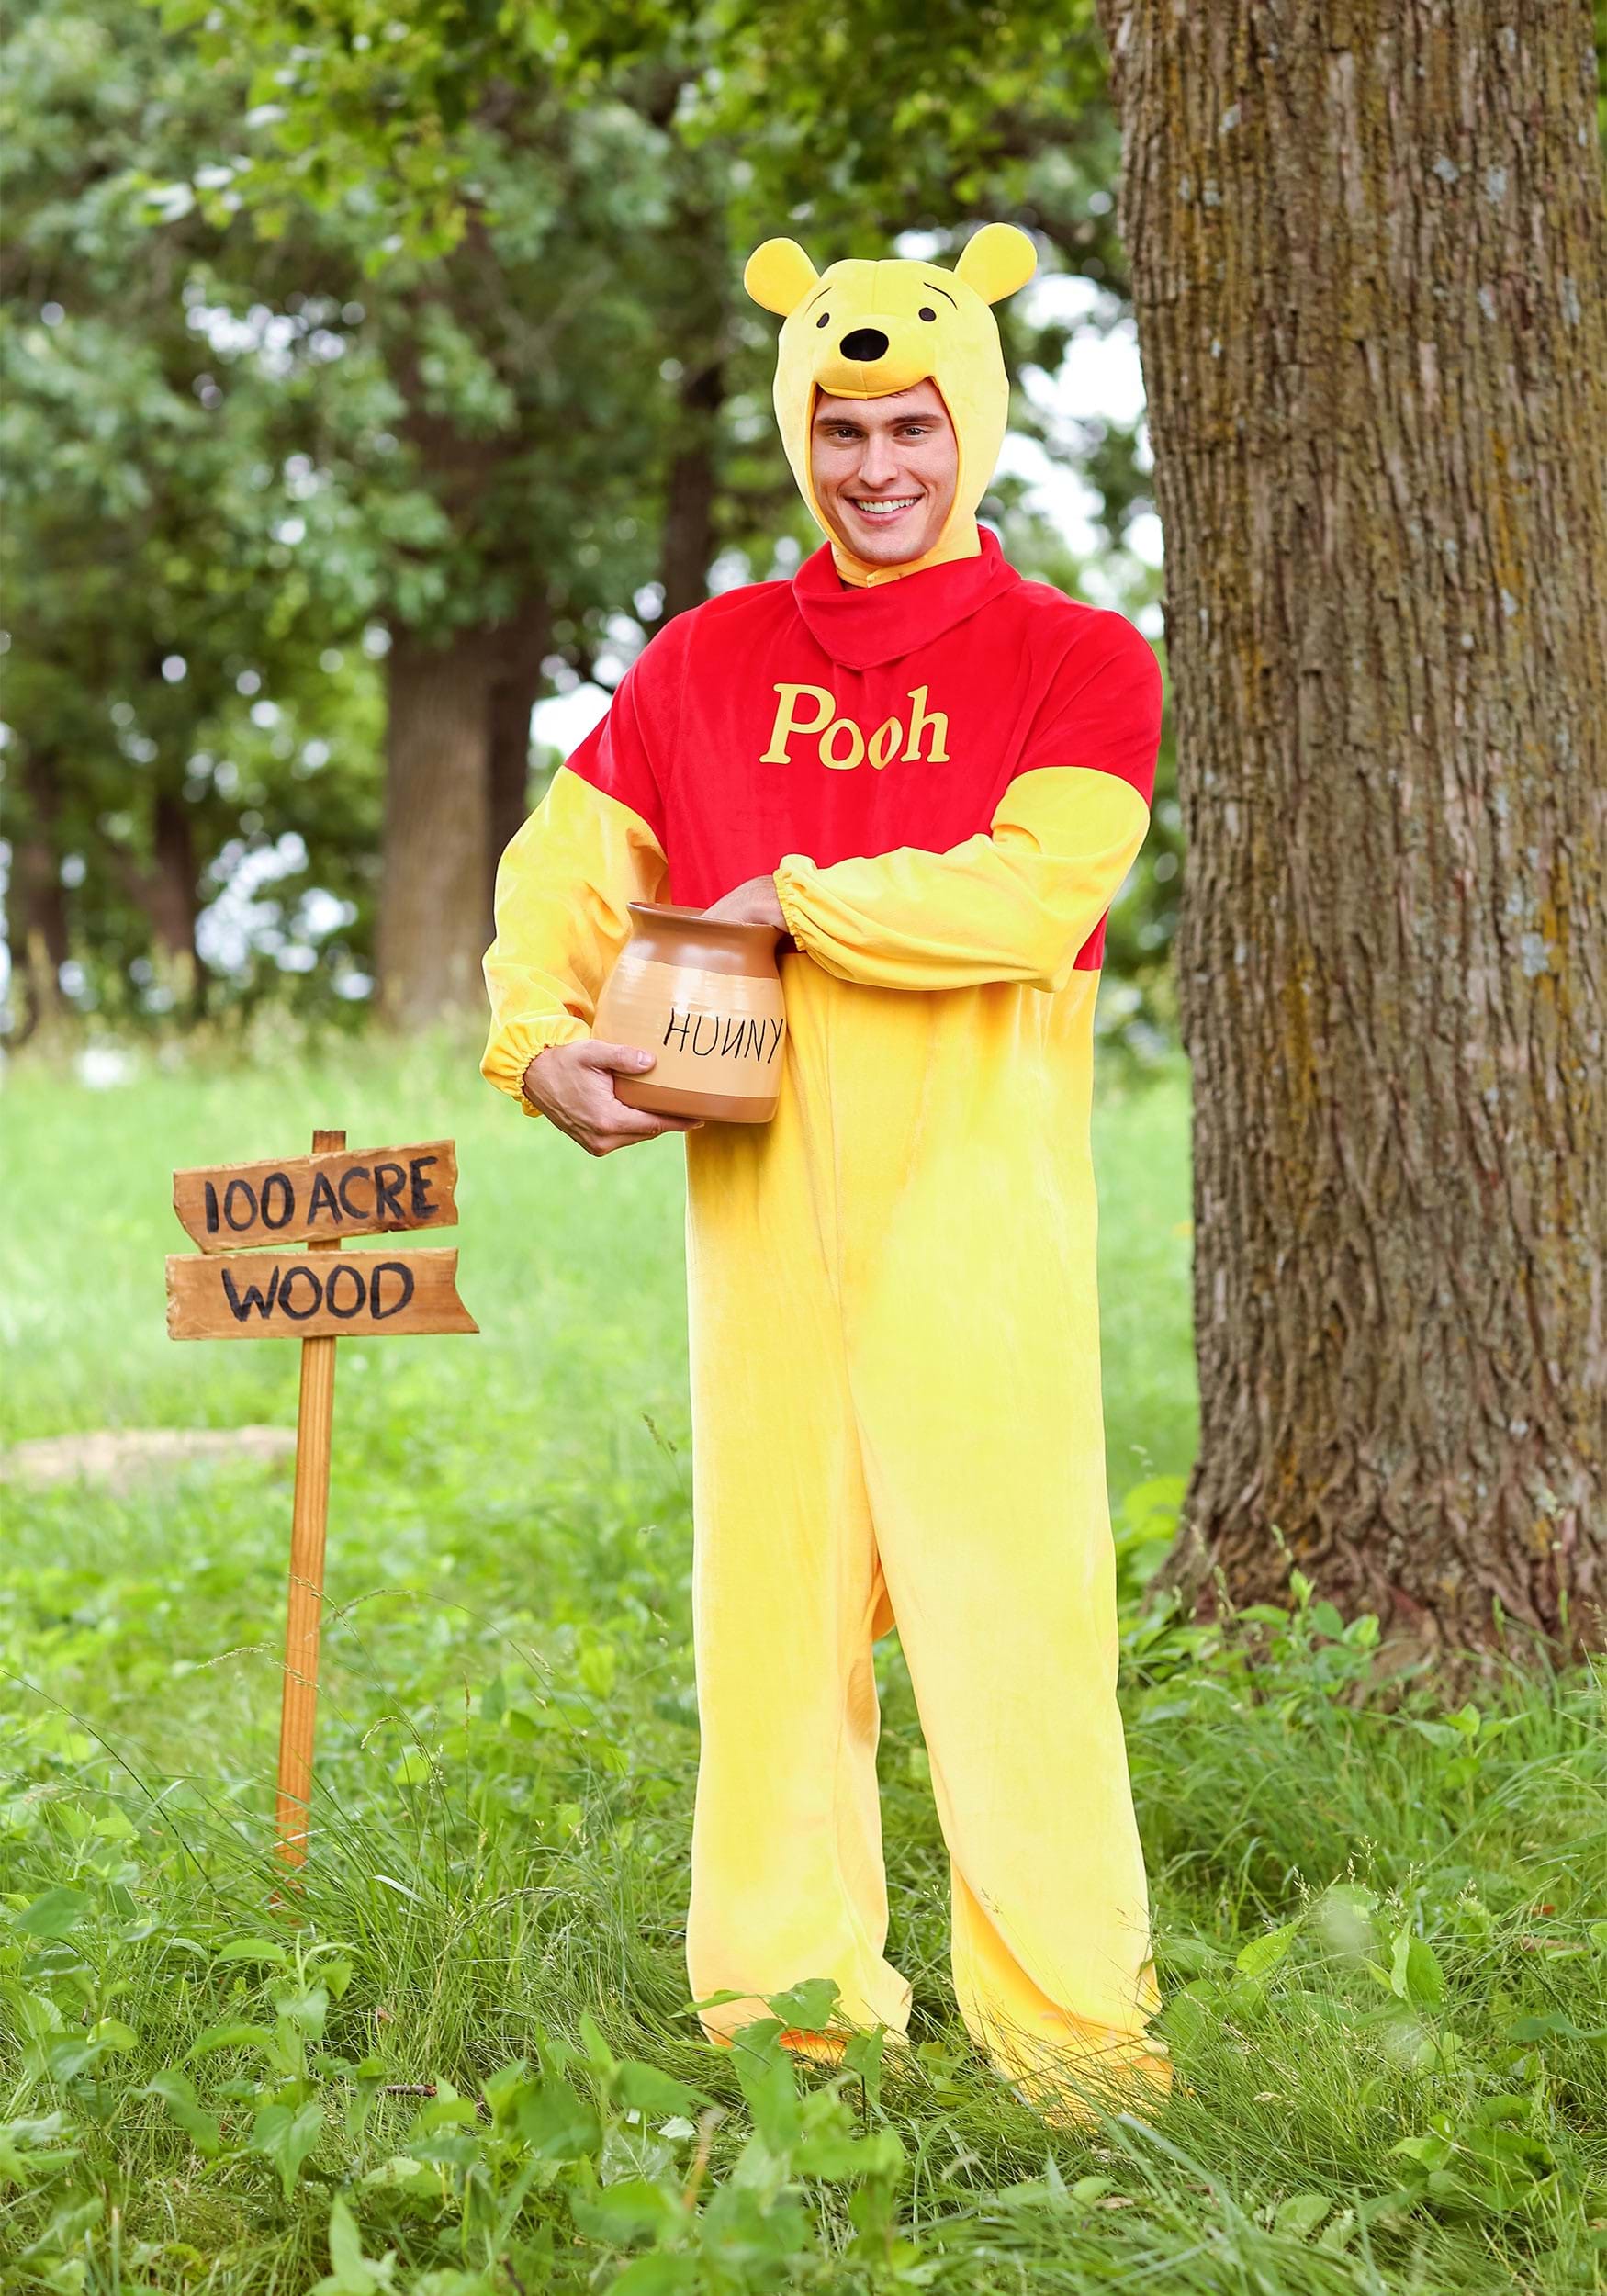 Winnie The Pooh Deluxe Plus Size Fancy Dress Costume